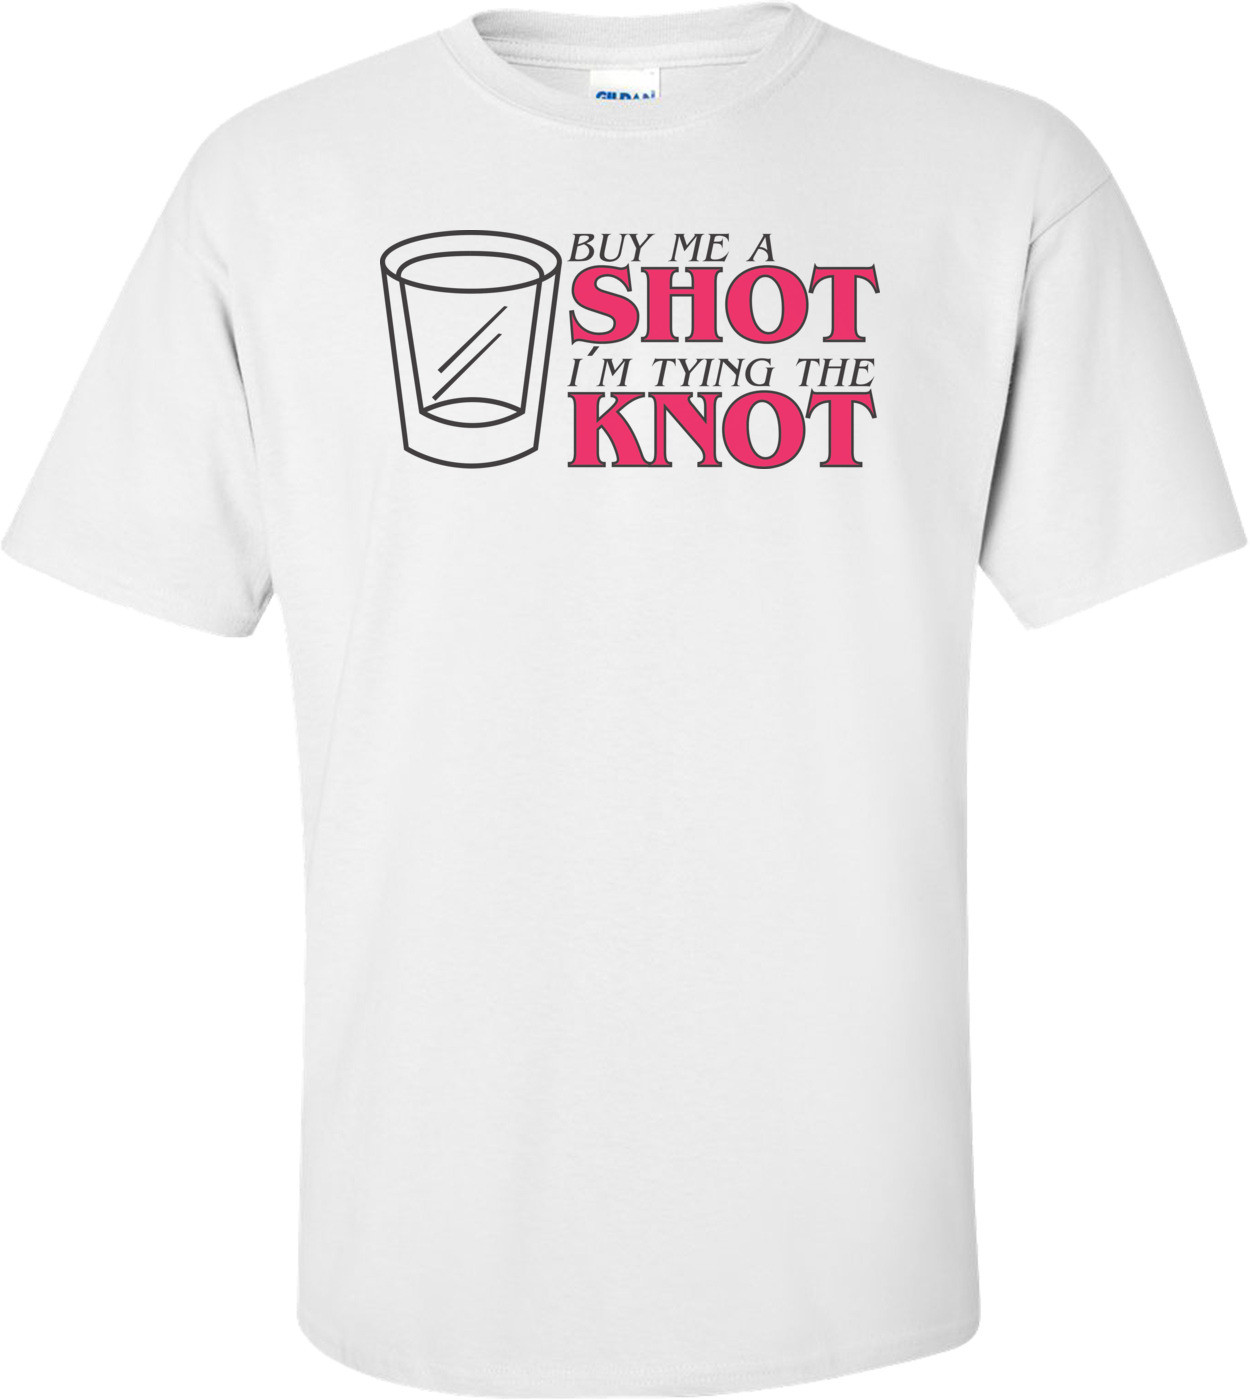 Buy Me A Shot I'm Tying The Knot T-shirt